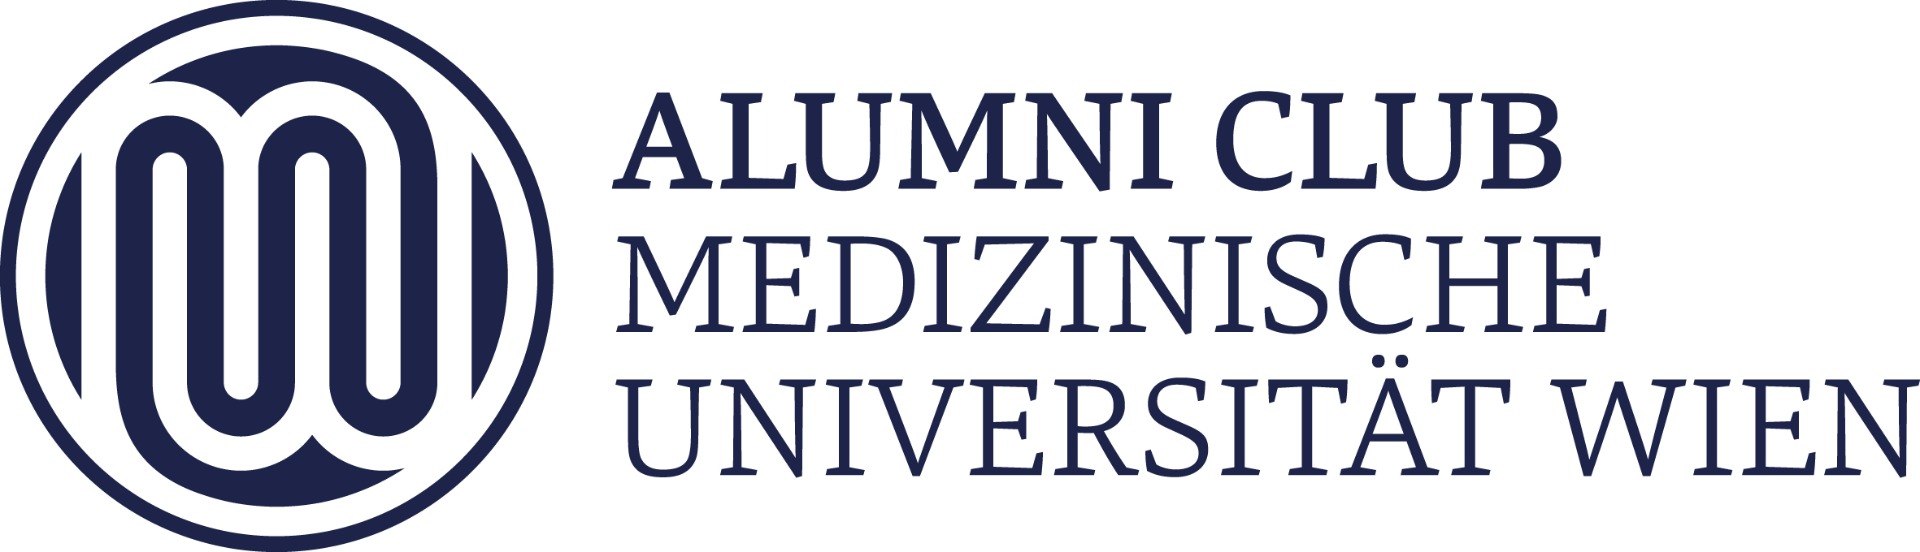 Alumni Club Med Uni Wien